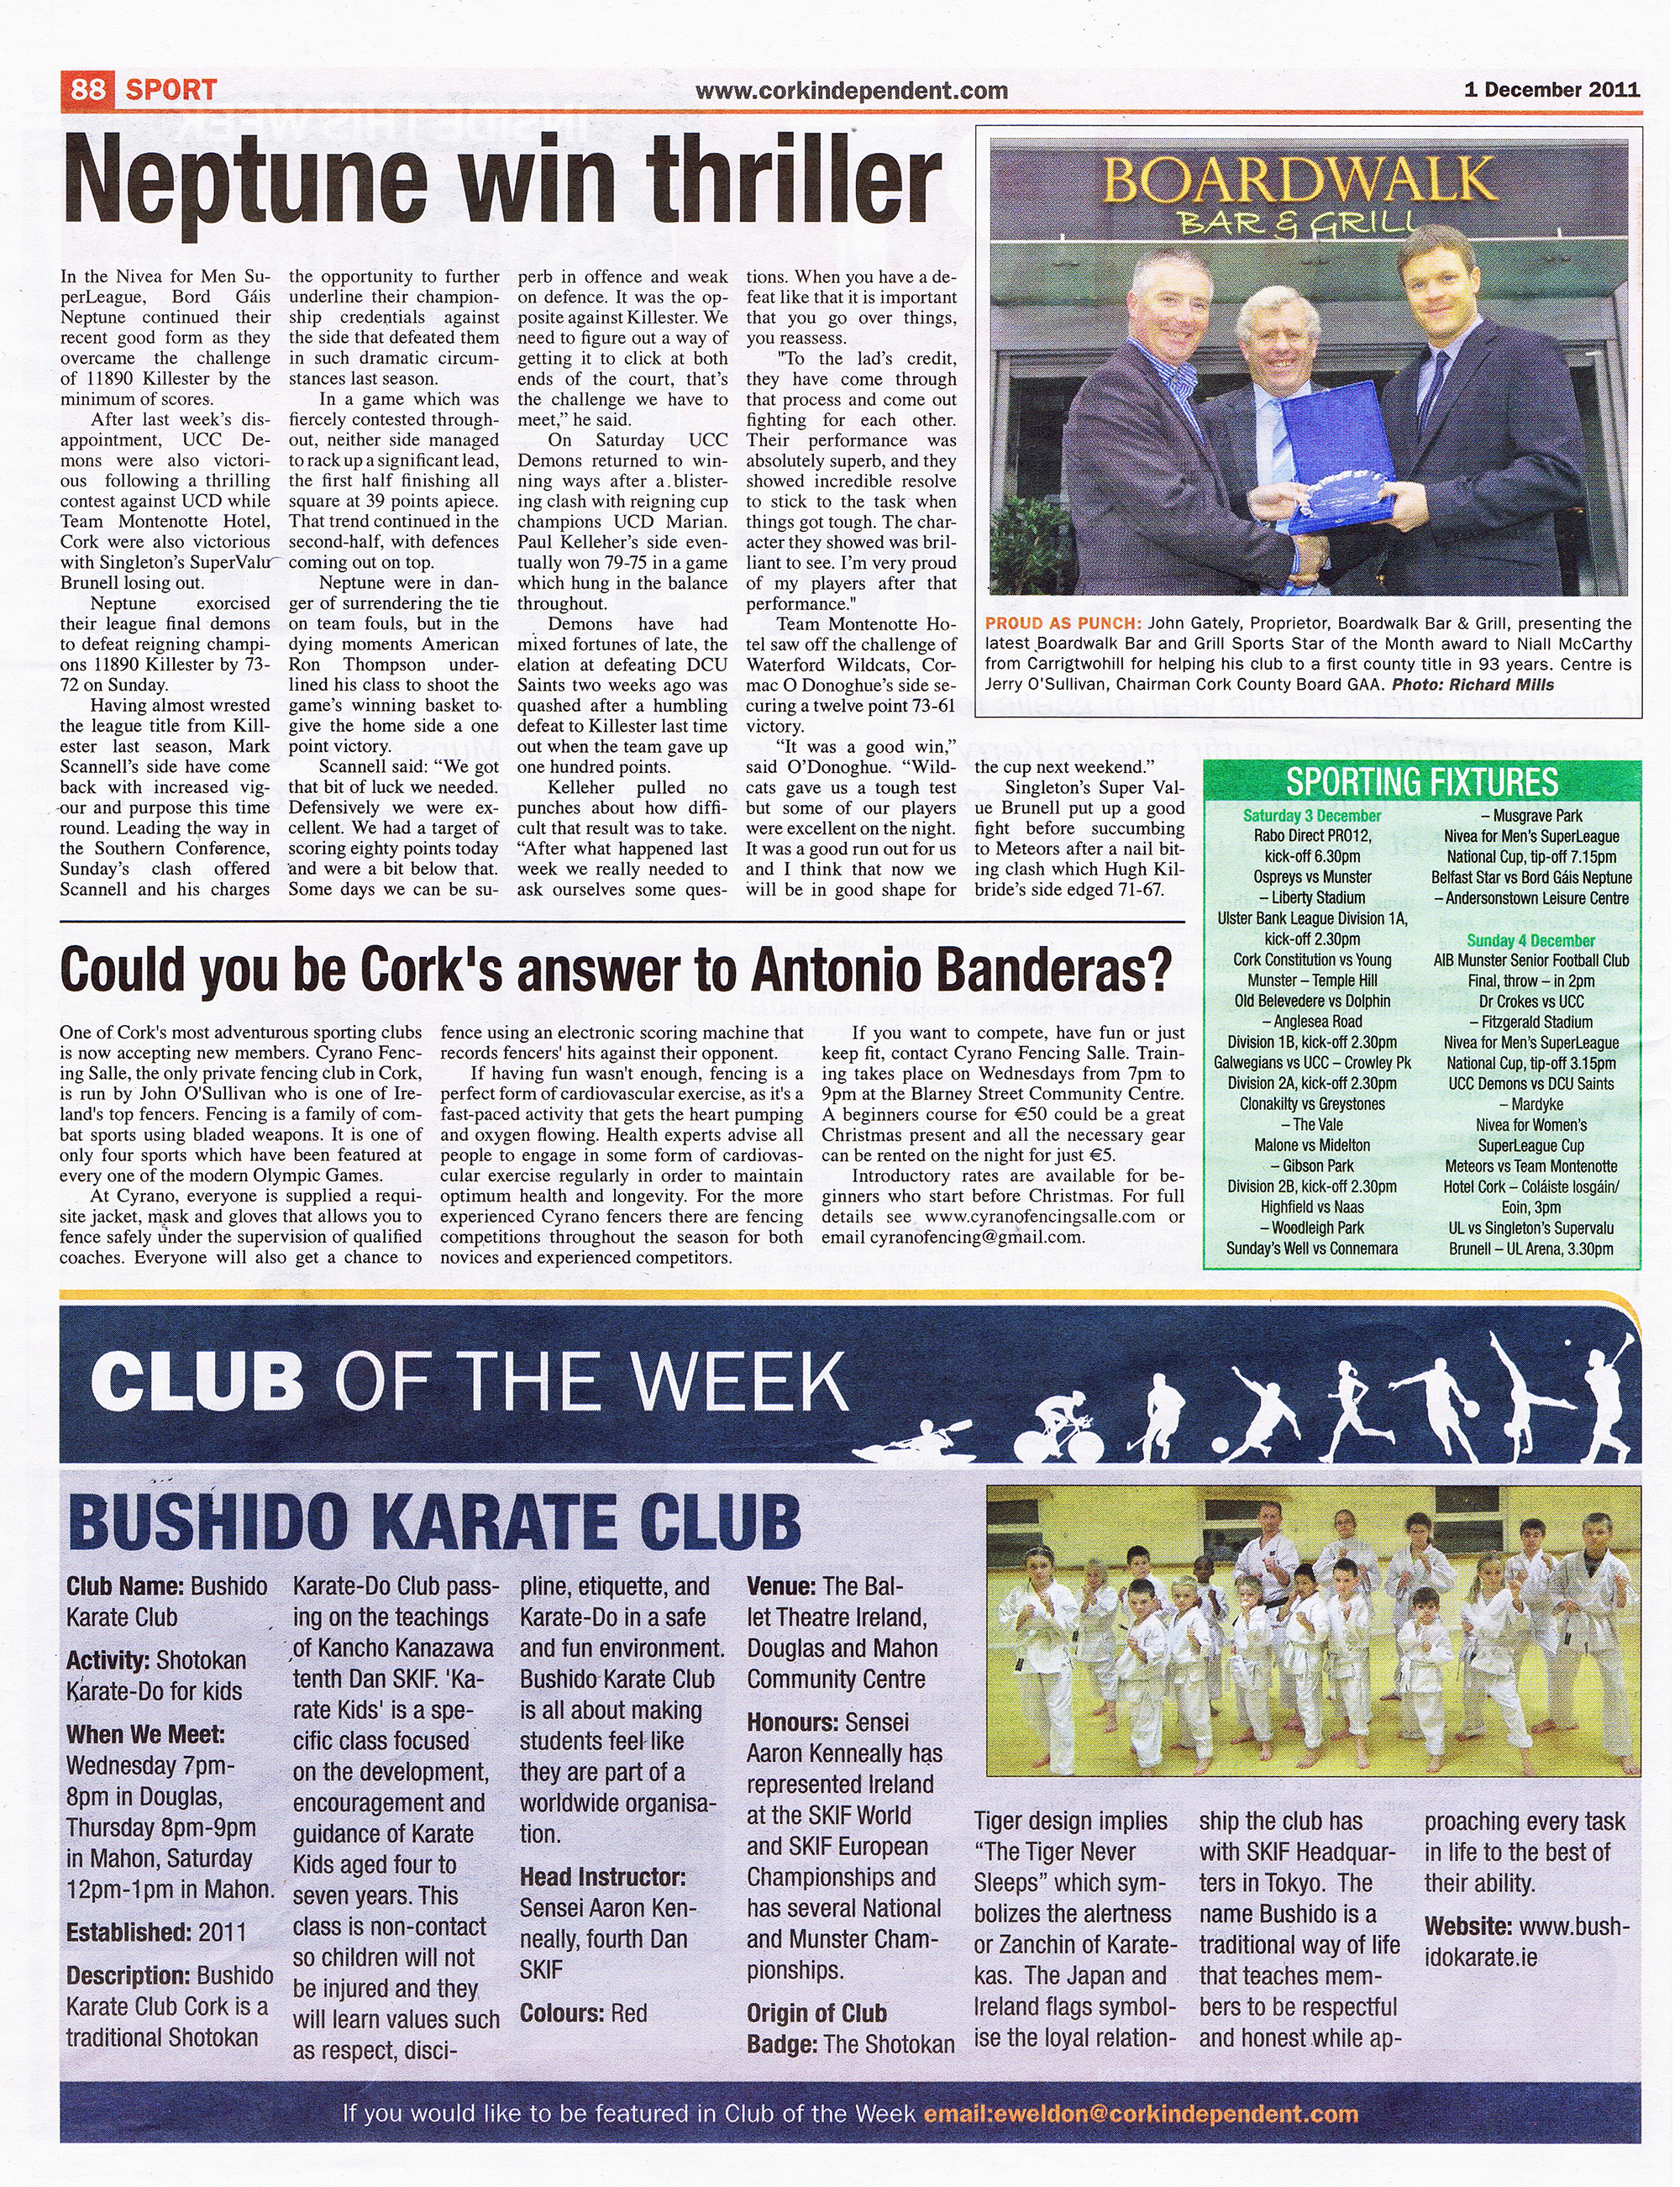 Cork Independant Club of the Week - Bushido Karate Club